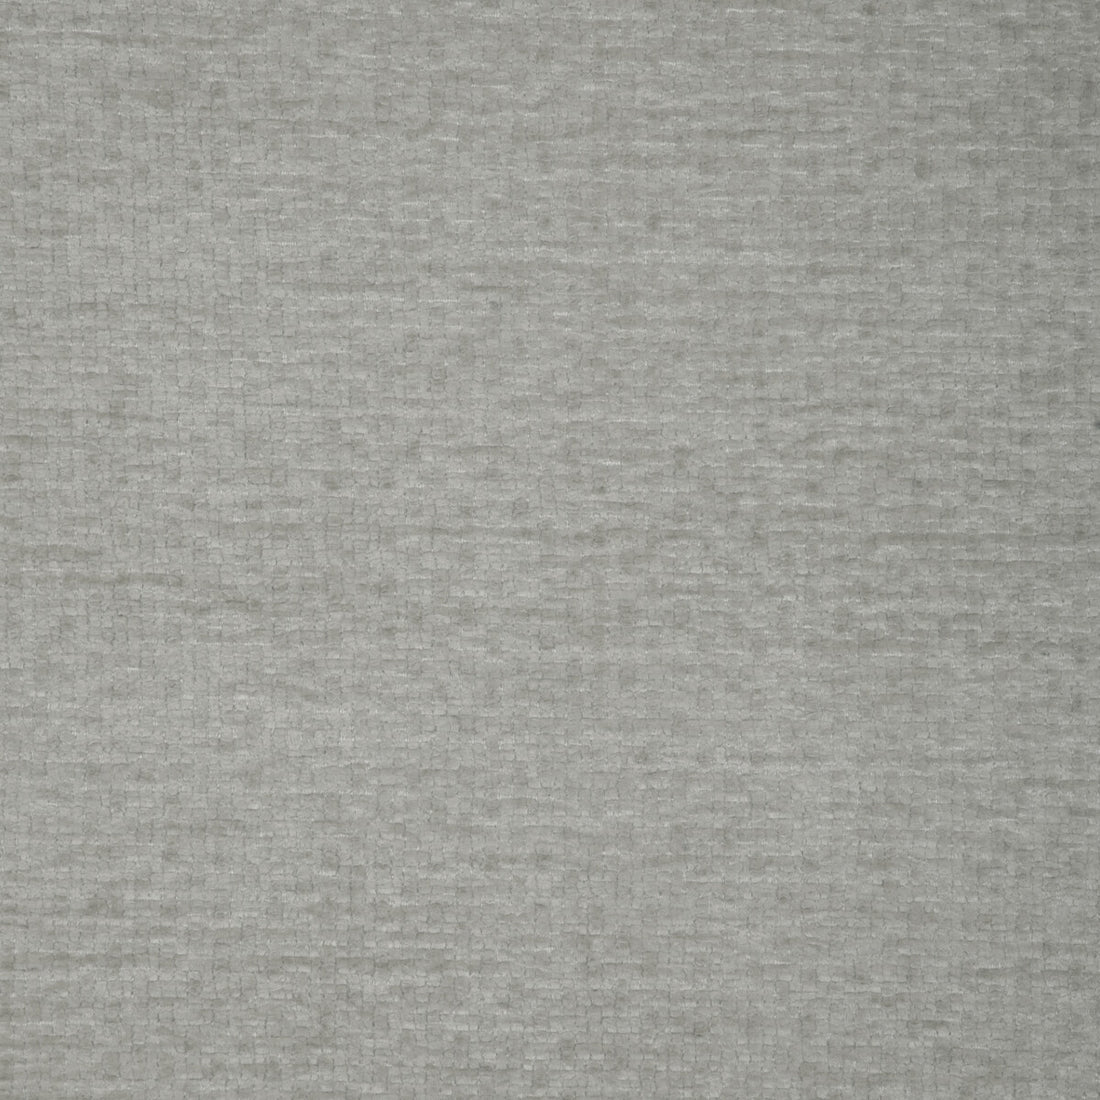 Kravet Smart fabric in 36993-11 color - pattern 36993.11.0 - by Kravet Smart in the Performance Kravetarmor collection